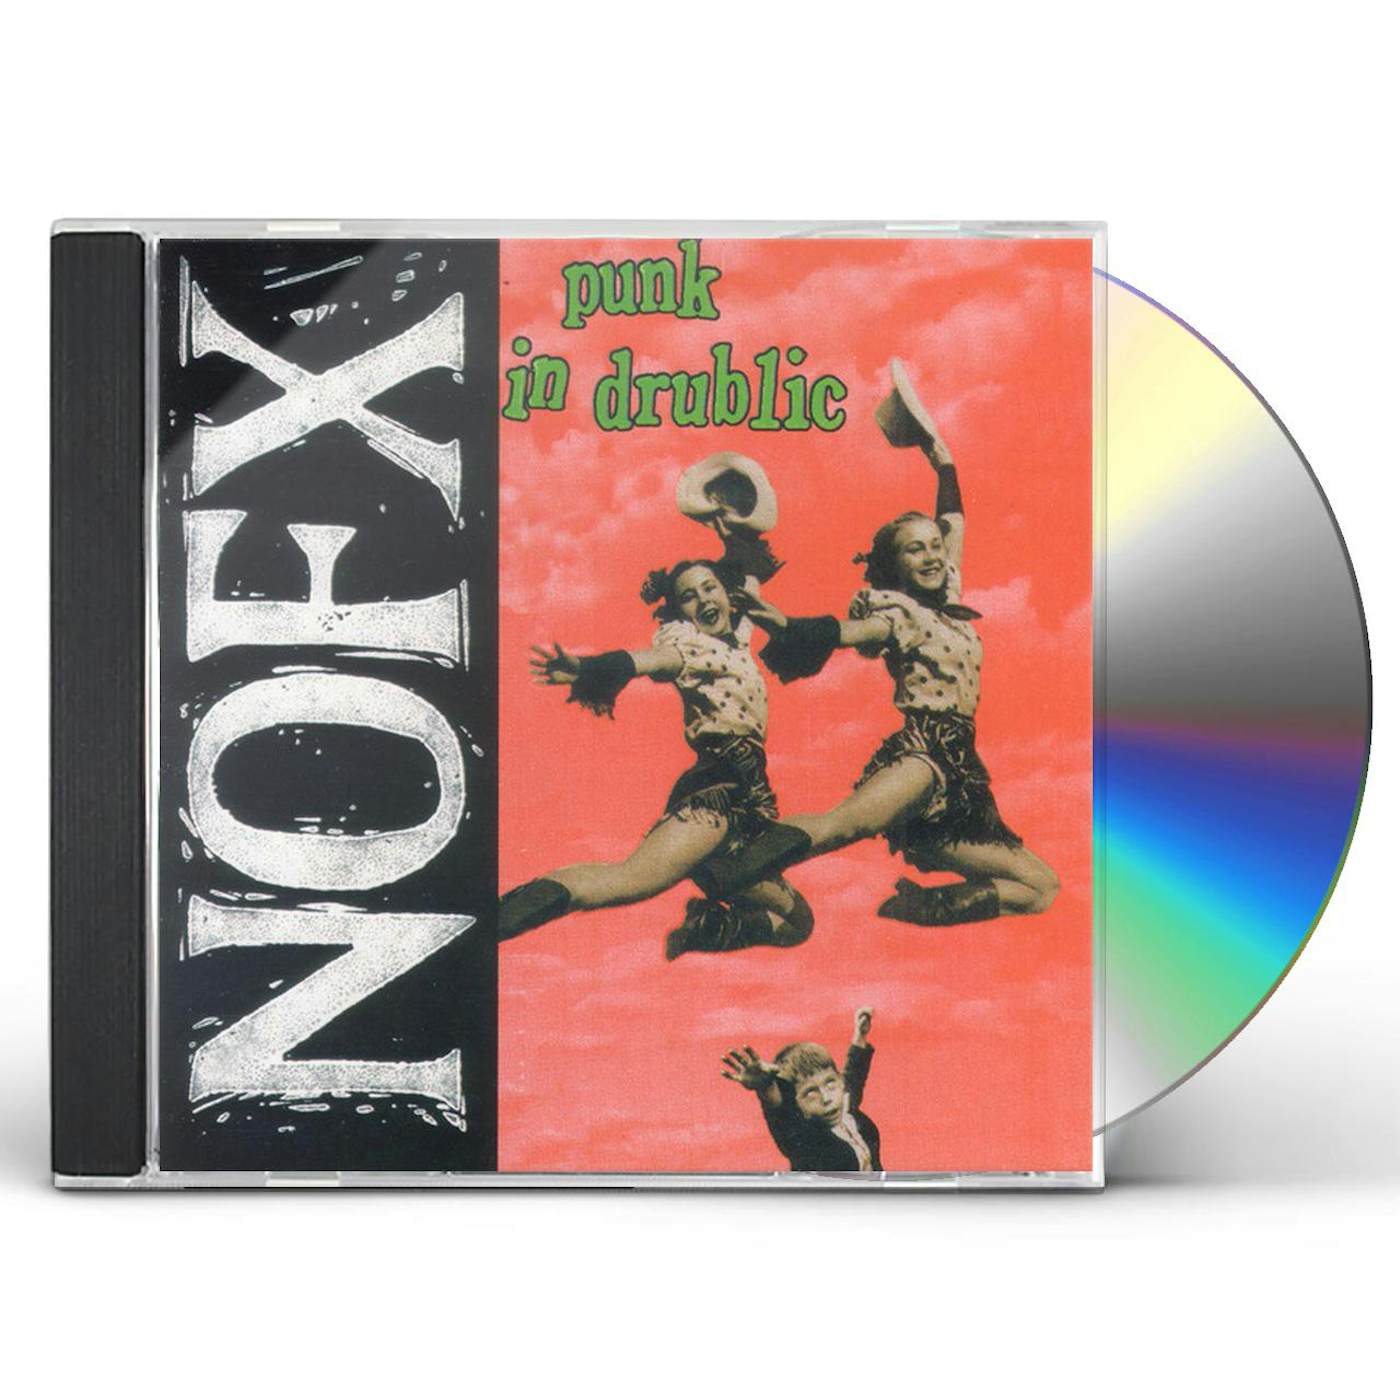 NOFX PUNK IN DRUBLIC CD